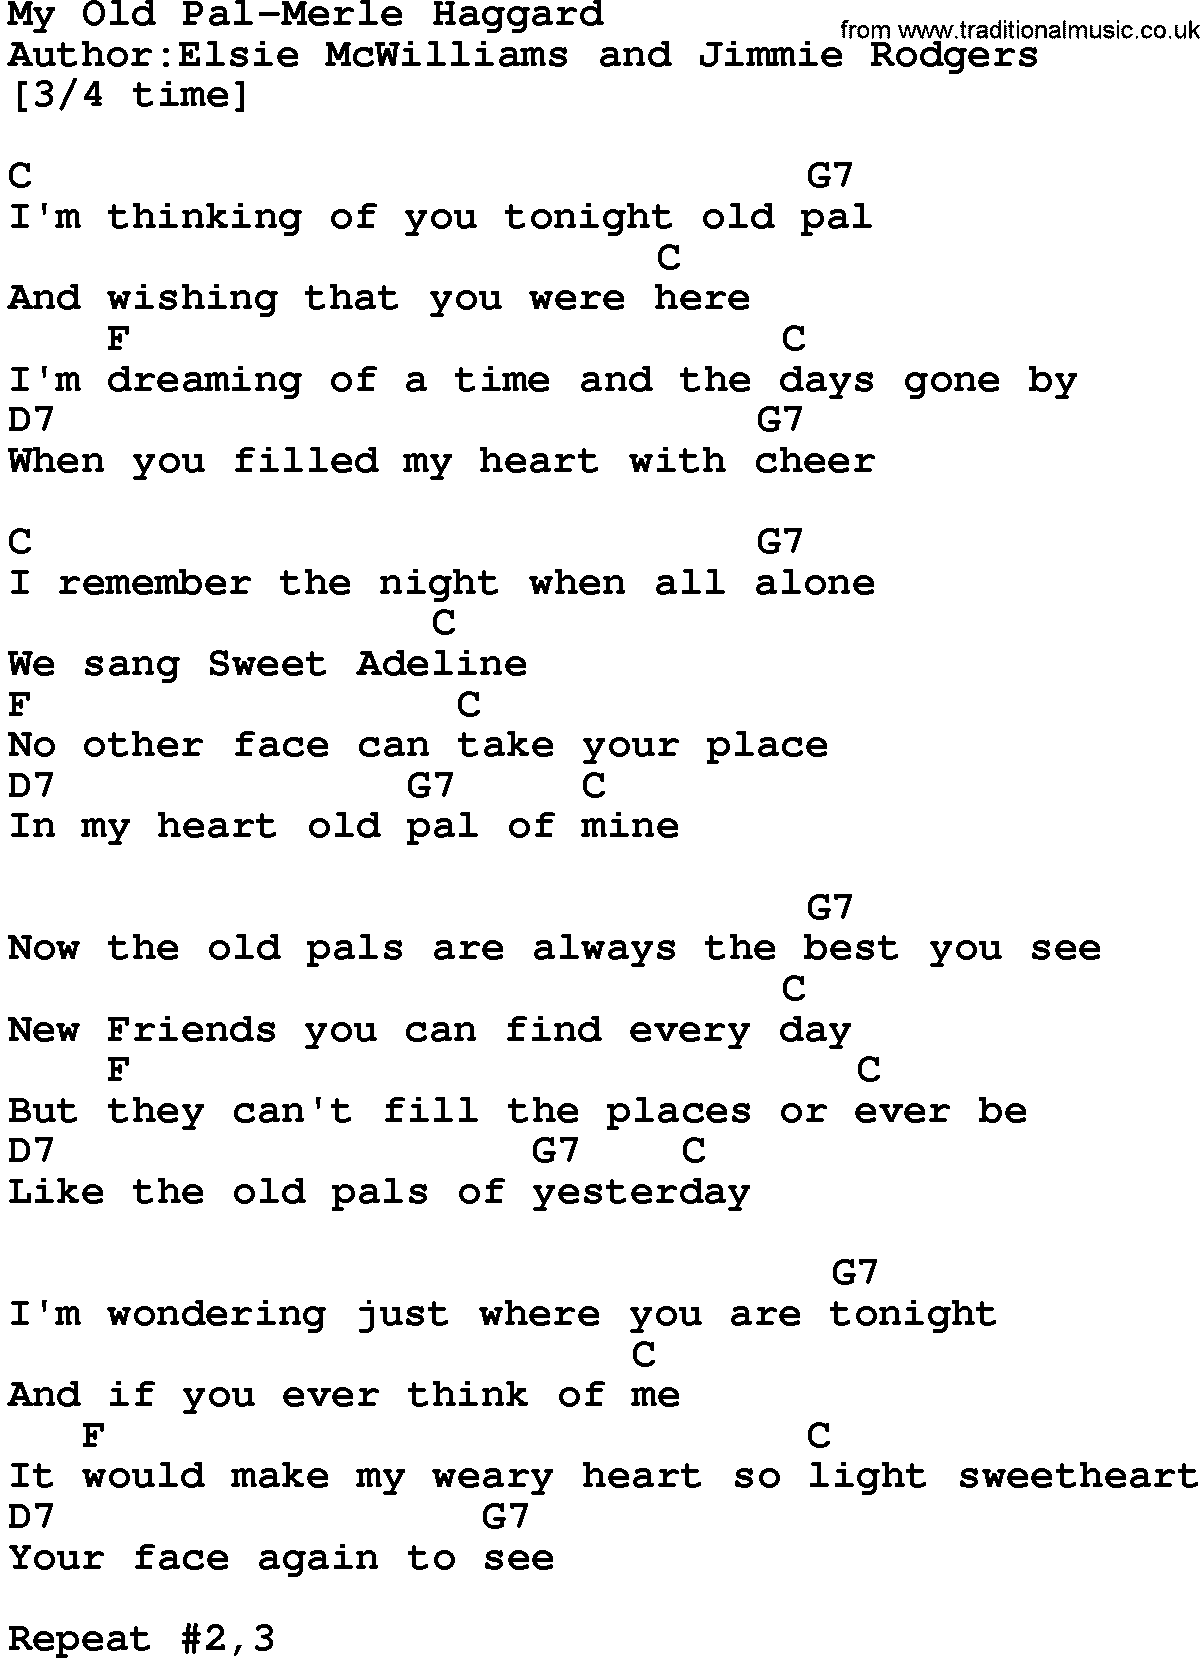 Country music song: My Old Pal-Merle Haggard lyrics and chords